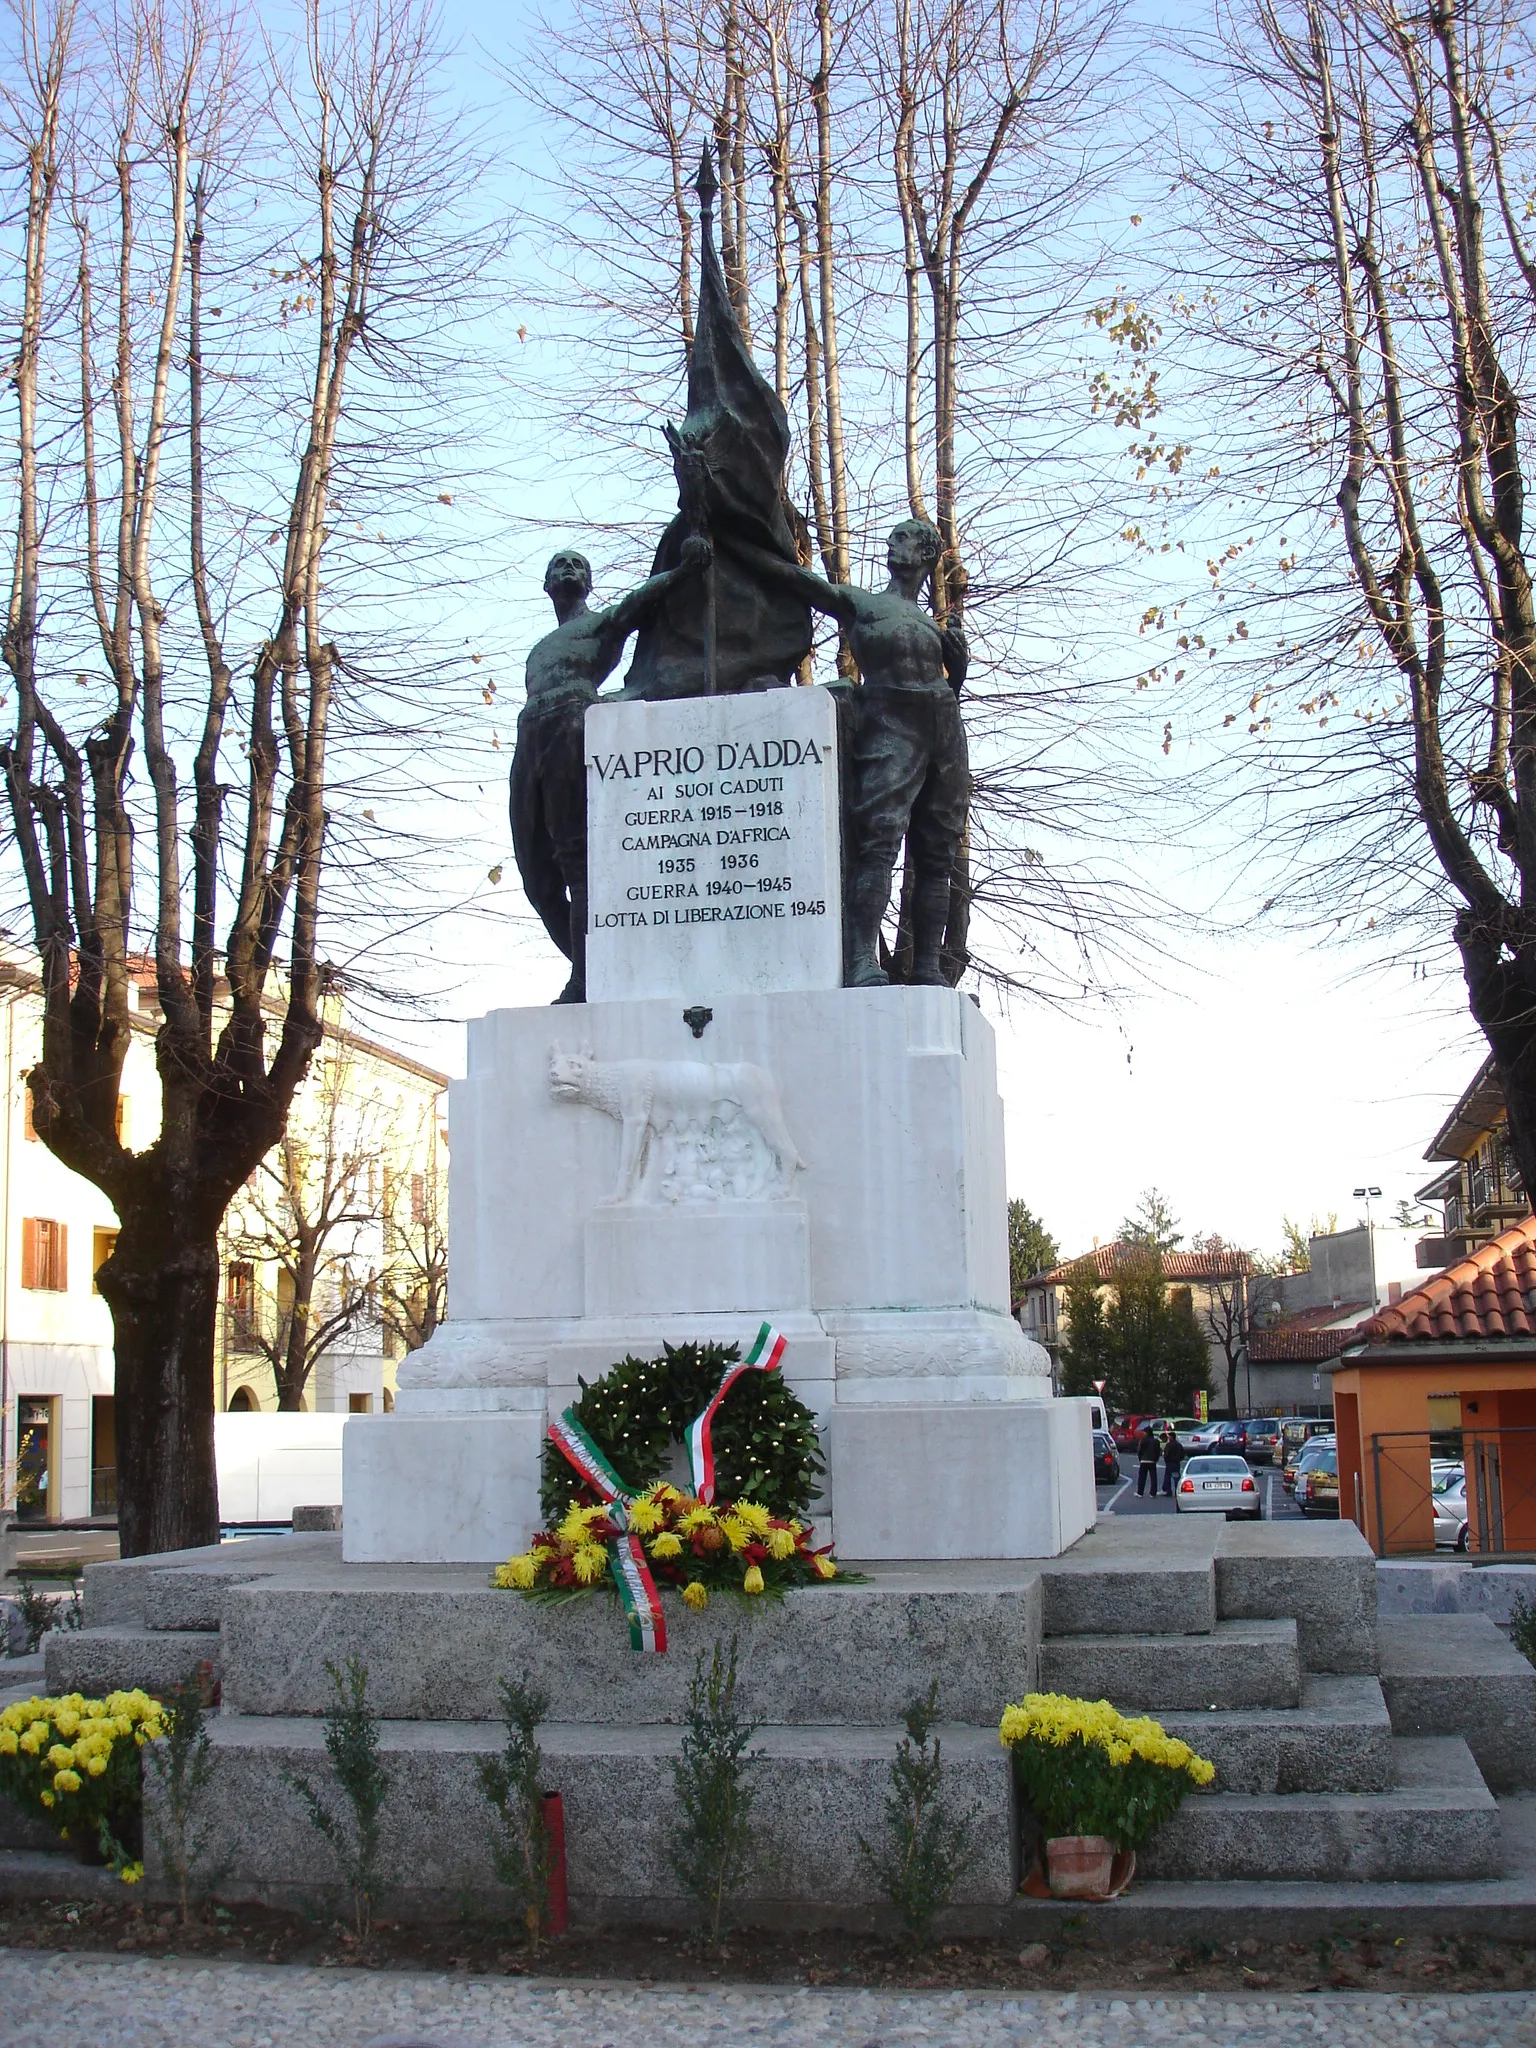 Photo showing: War memorial in Vapiro d'Adda